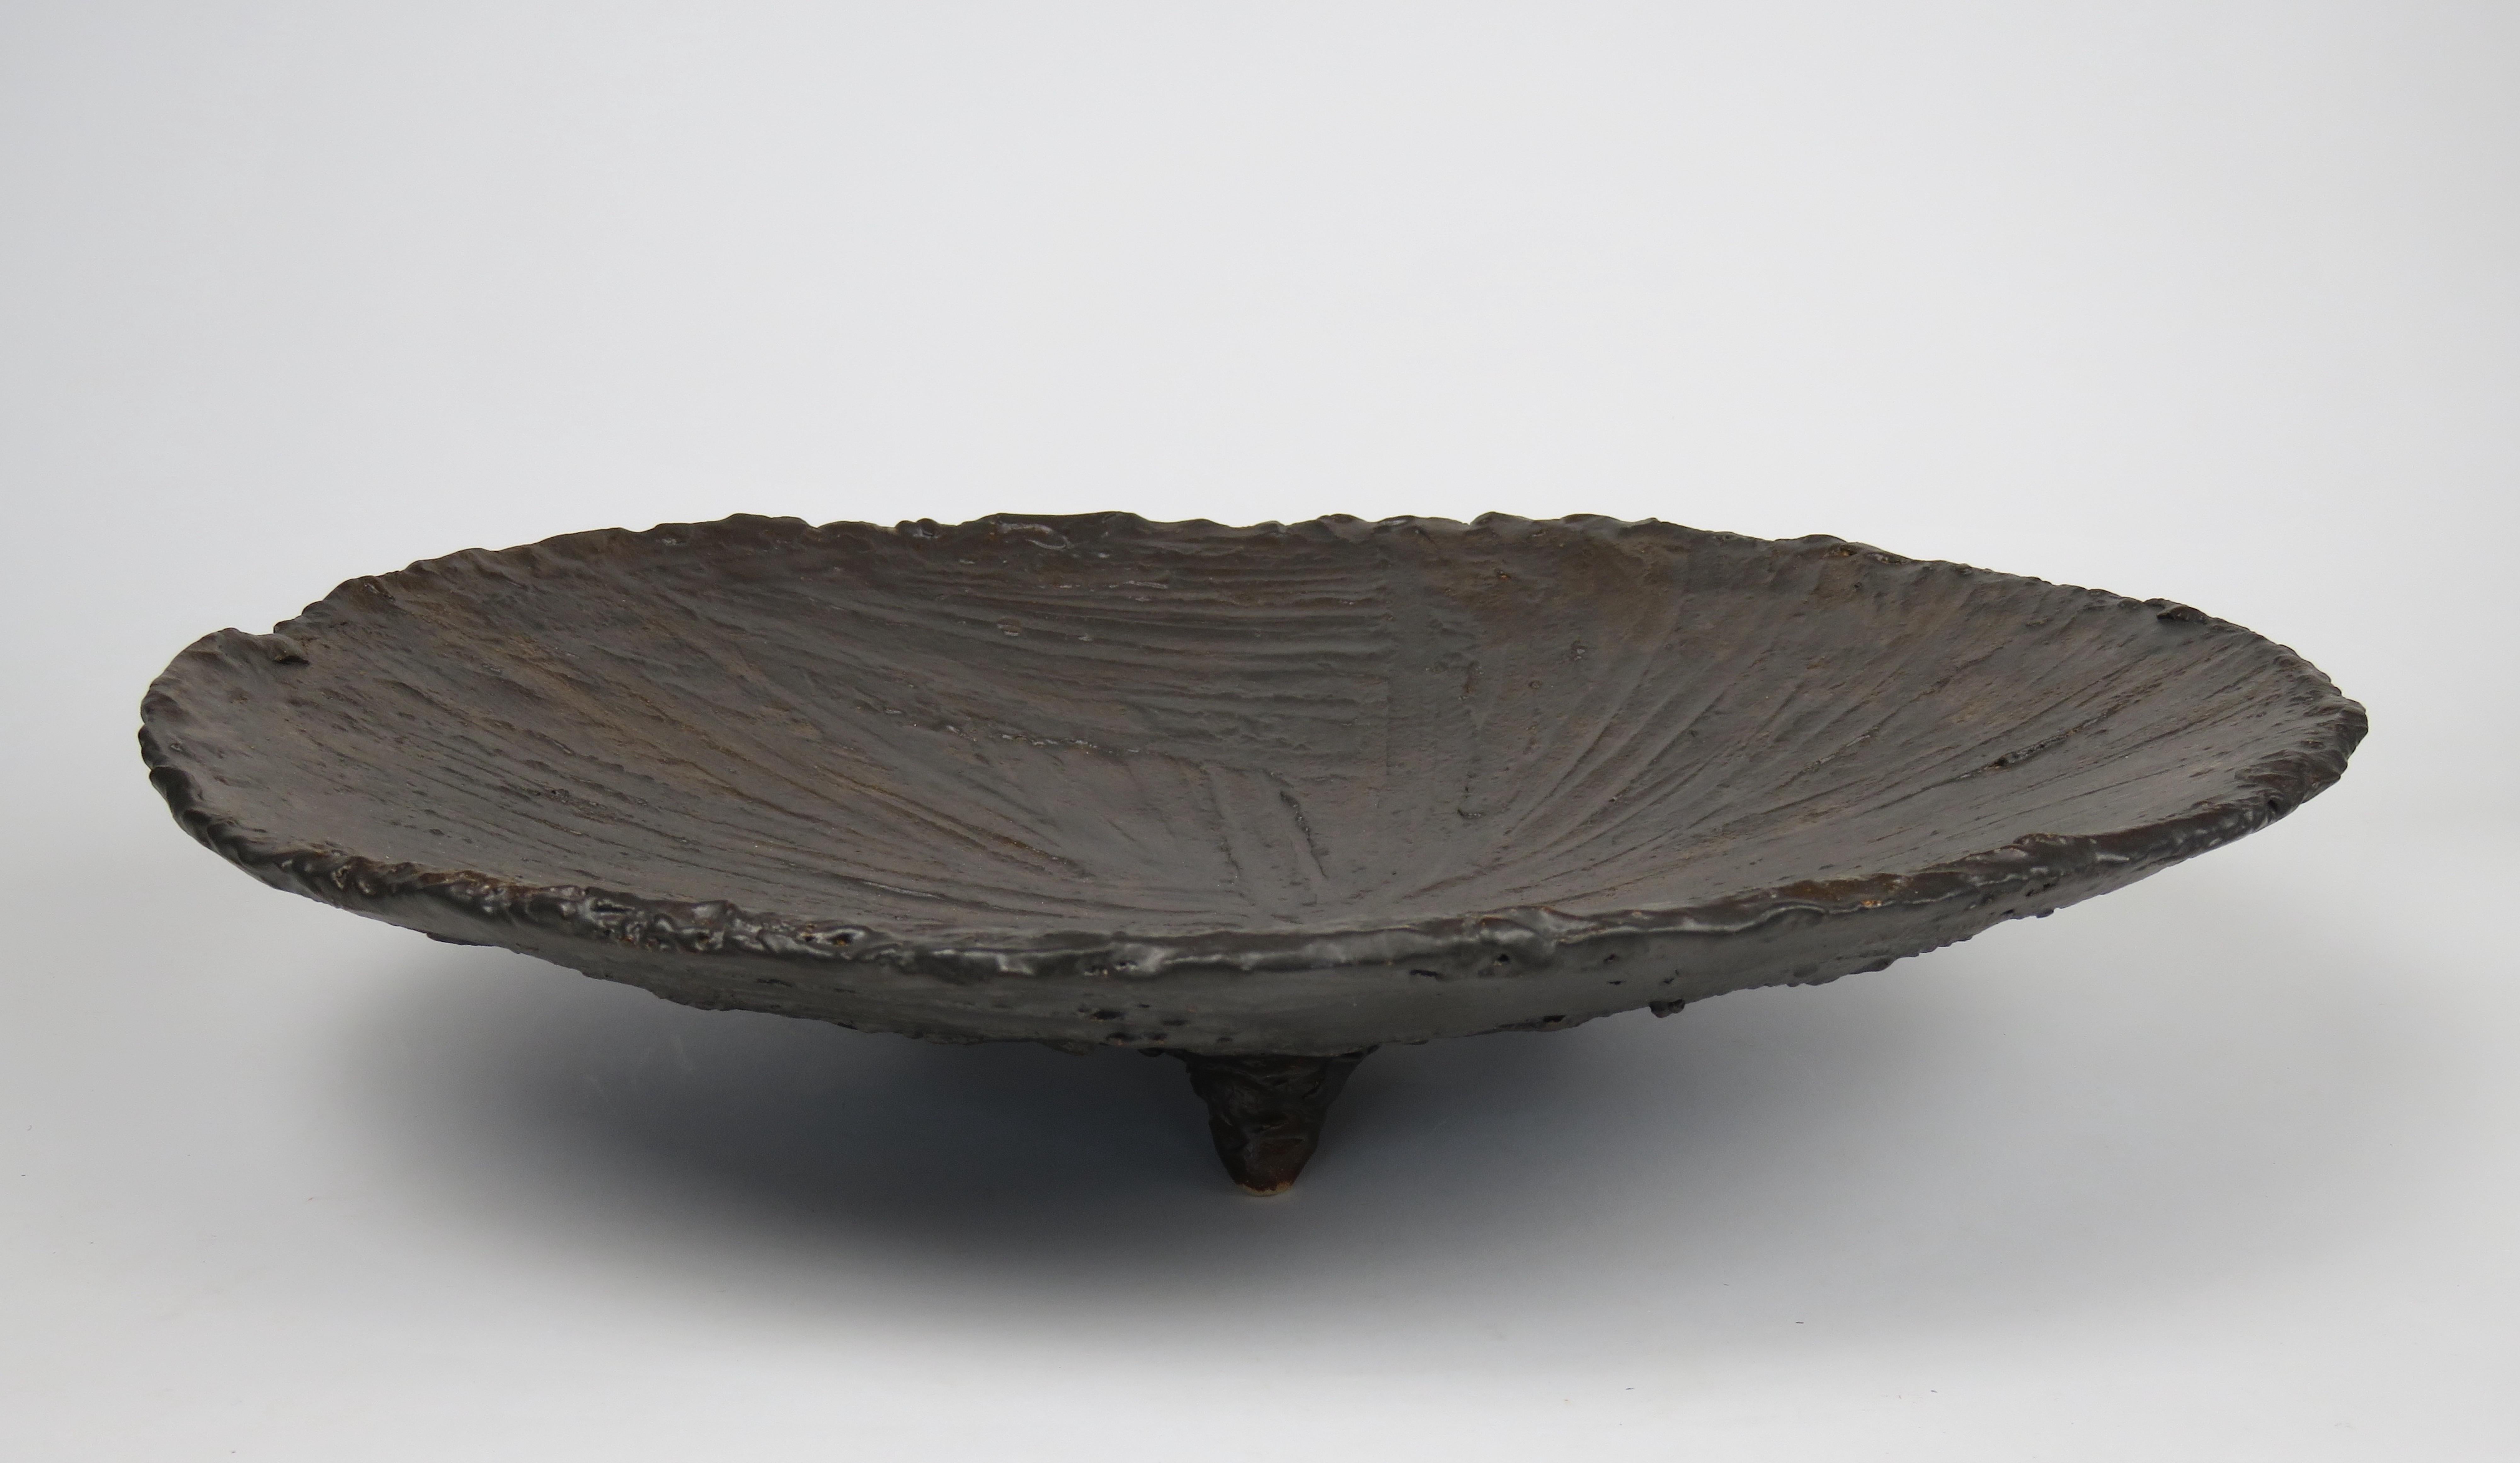 American Large Textured Ceramic Bowl on Tripod Feet in Brown/Metallic Glaze Hand Built